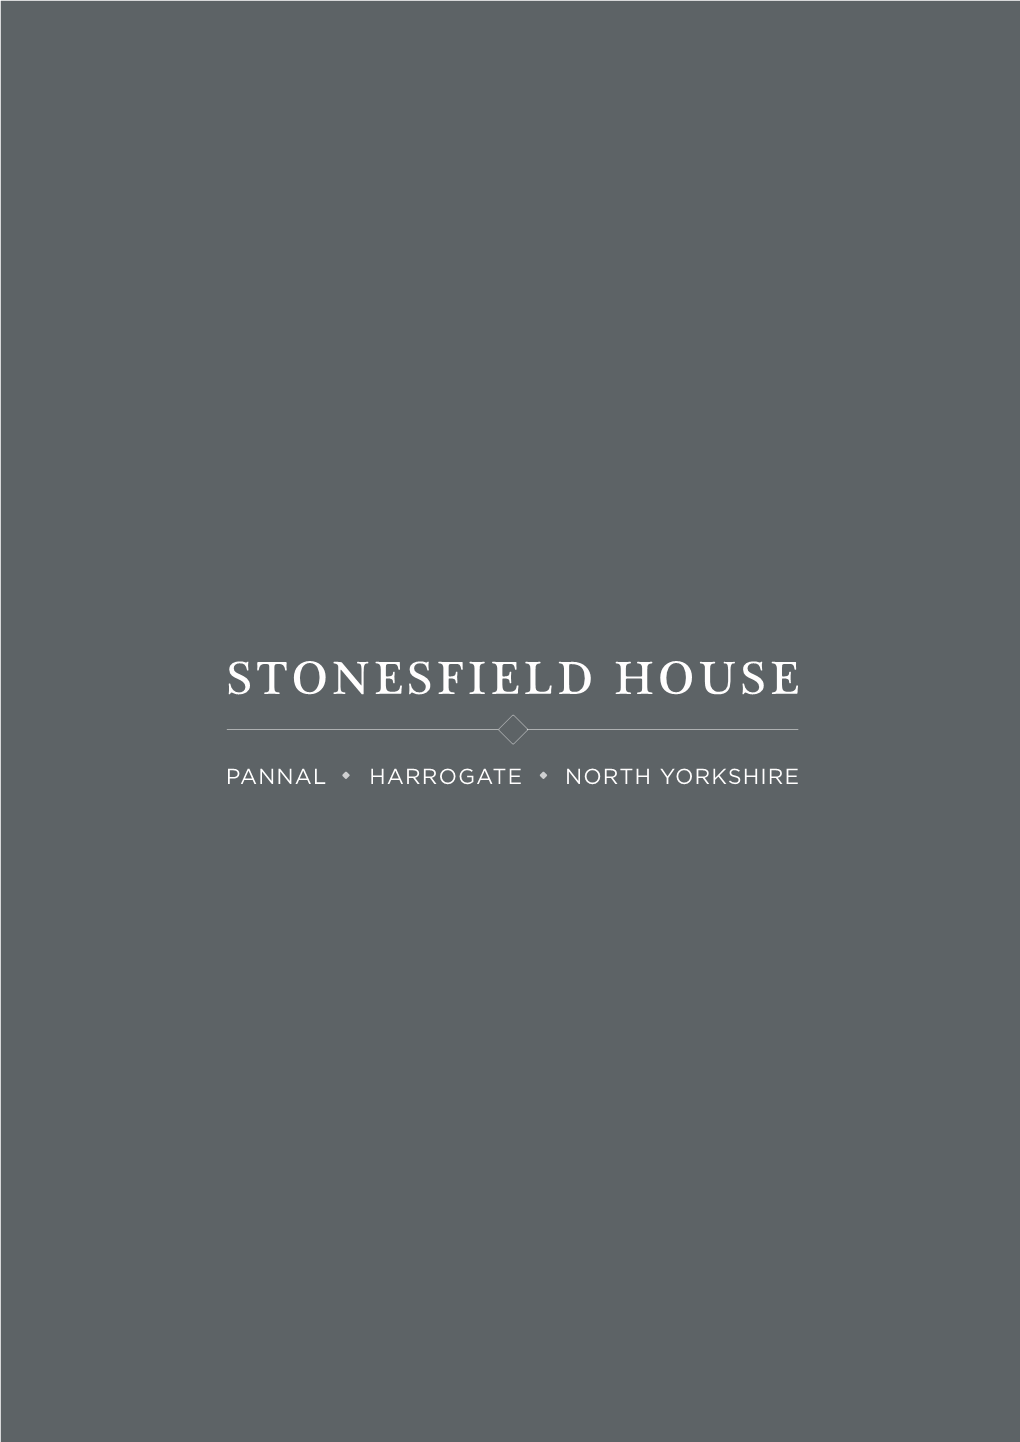 Pannal • Harrogate • North Yorkshire 2 Stonesfield House Stonesfield House 3 Stonesfield House, Hill Top Lane, Pannal, Hg3 1Pa